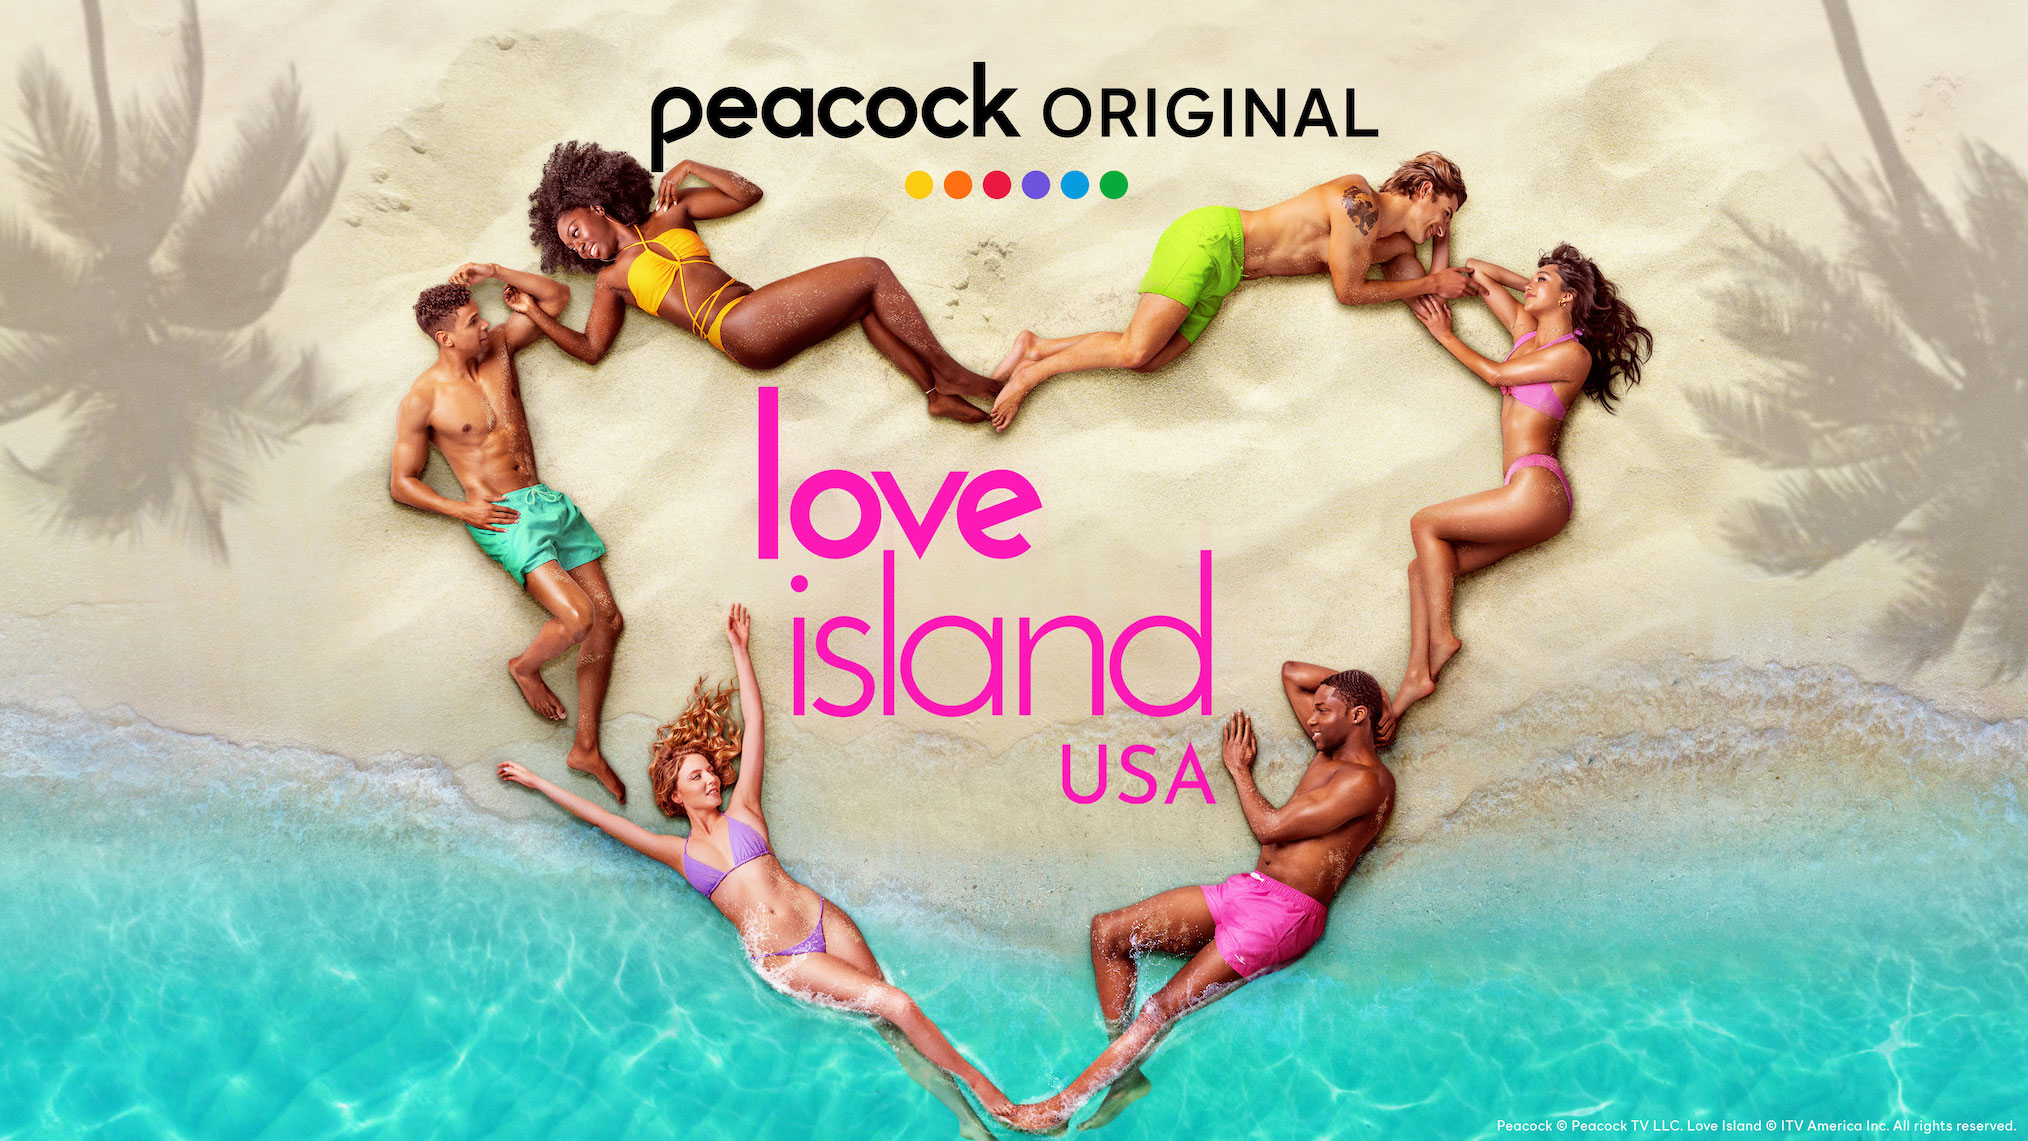 ‘love island usa’ sets peacock season 5 release date – watch first teaser (video)